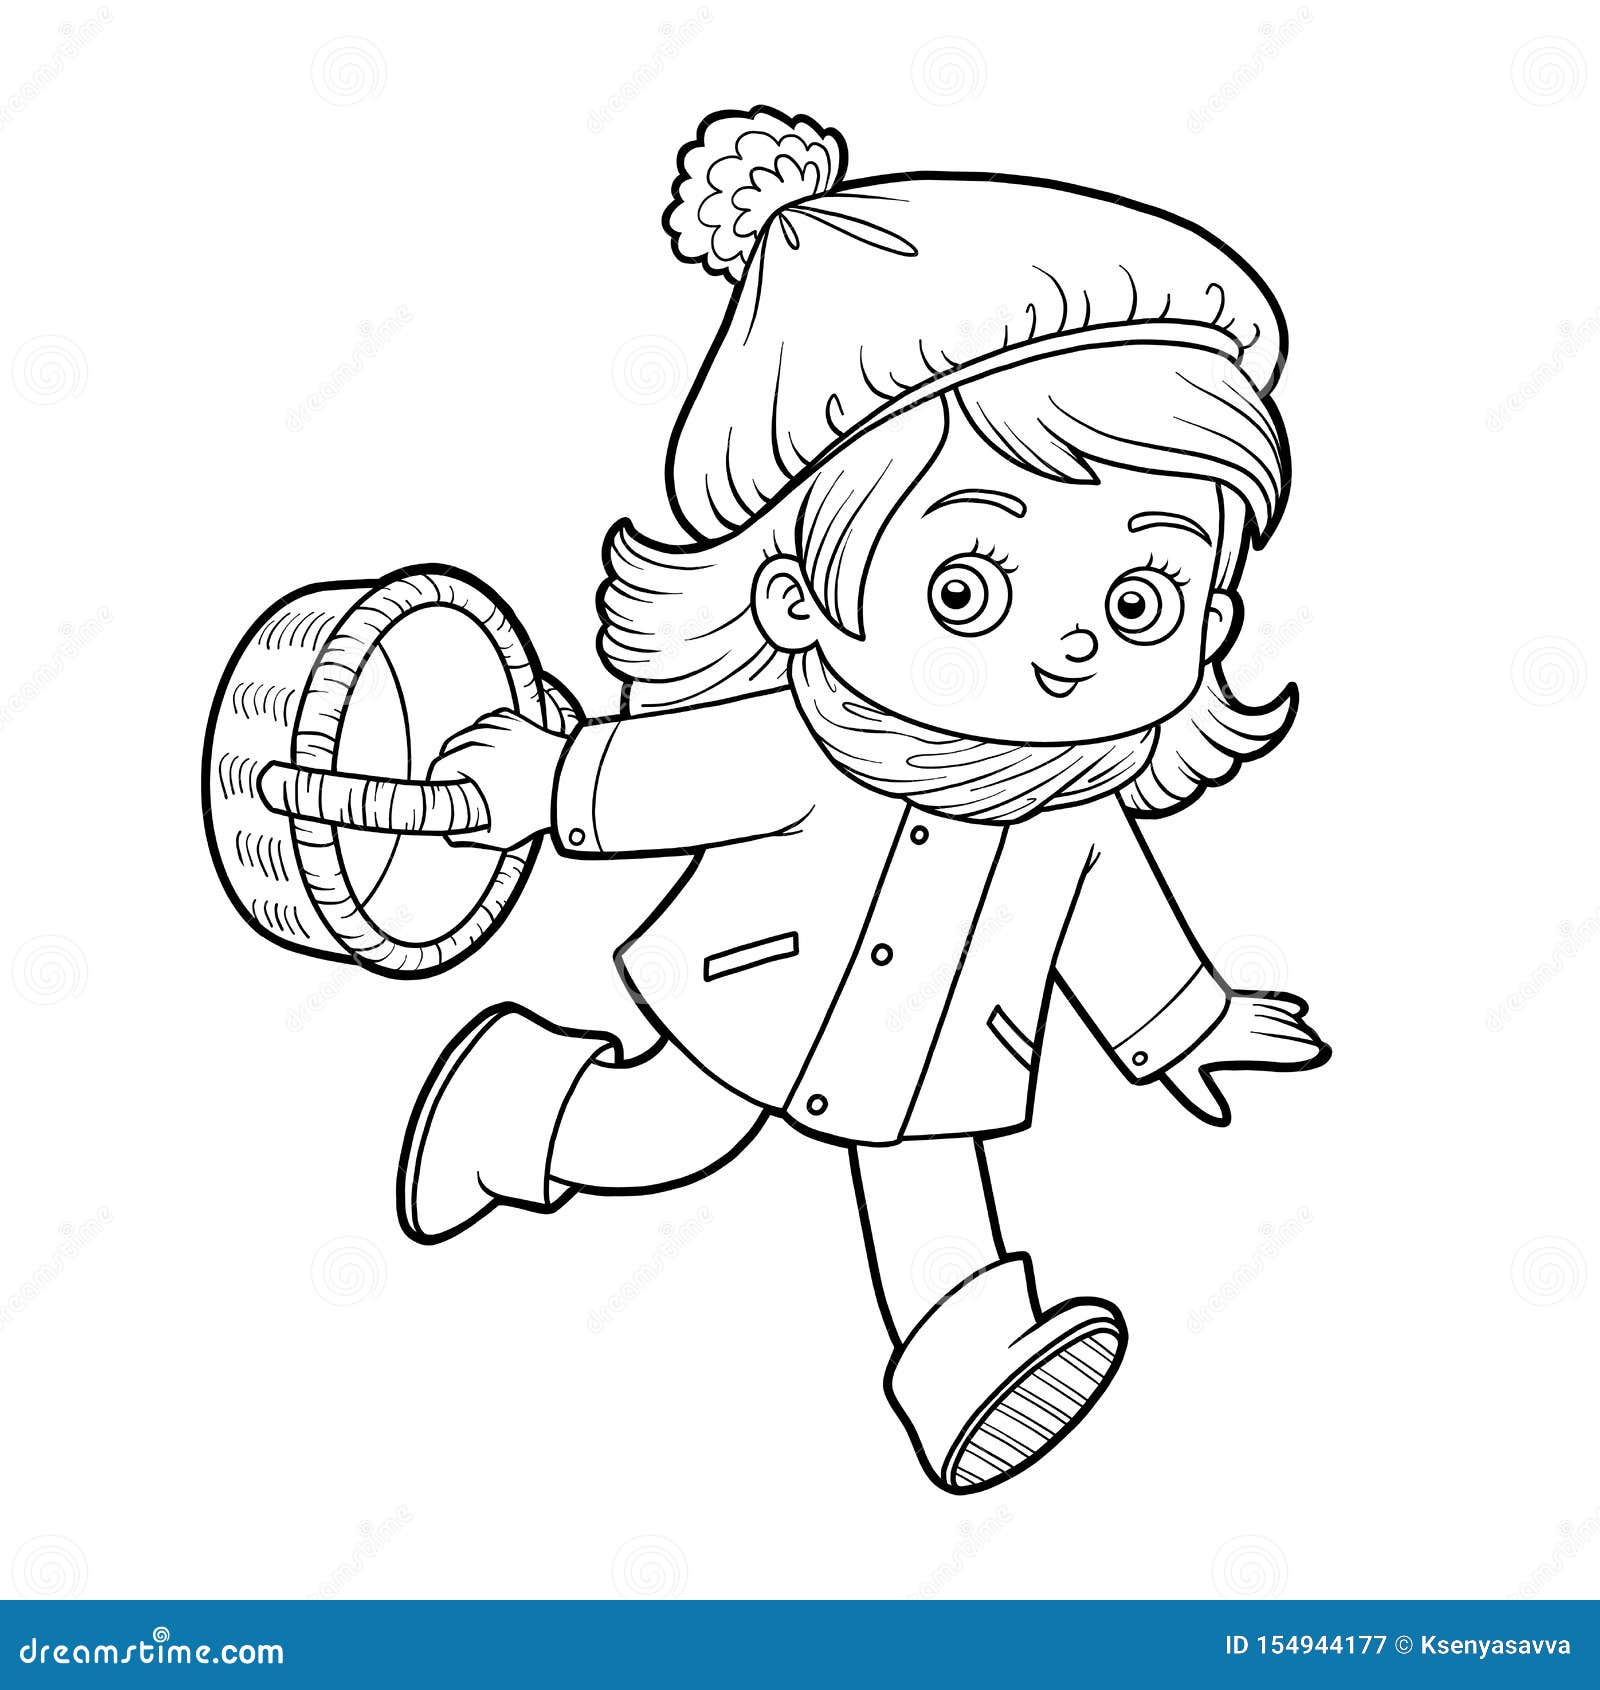 Download Coloring Girl Playing Curling In The Park Vector Illustration | CartoonDealer.com #84324620